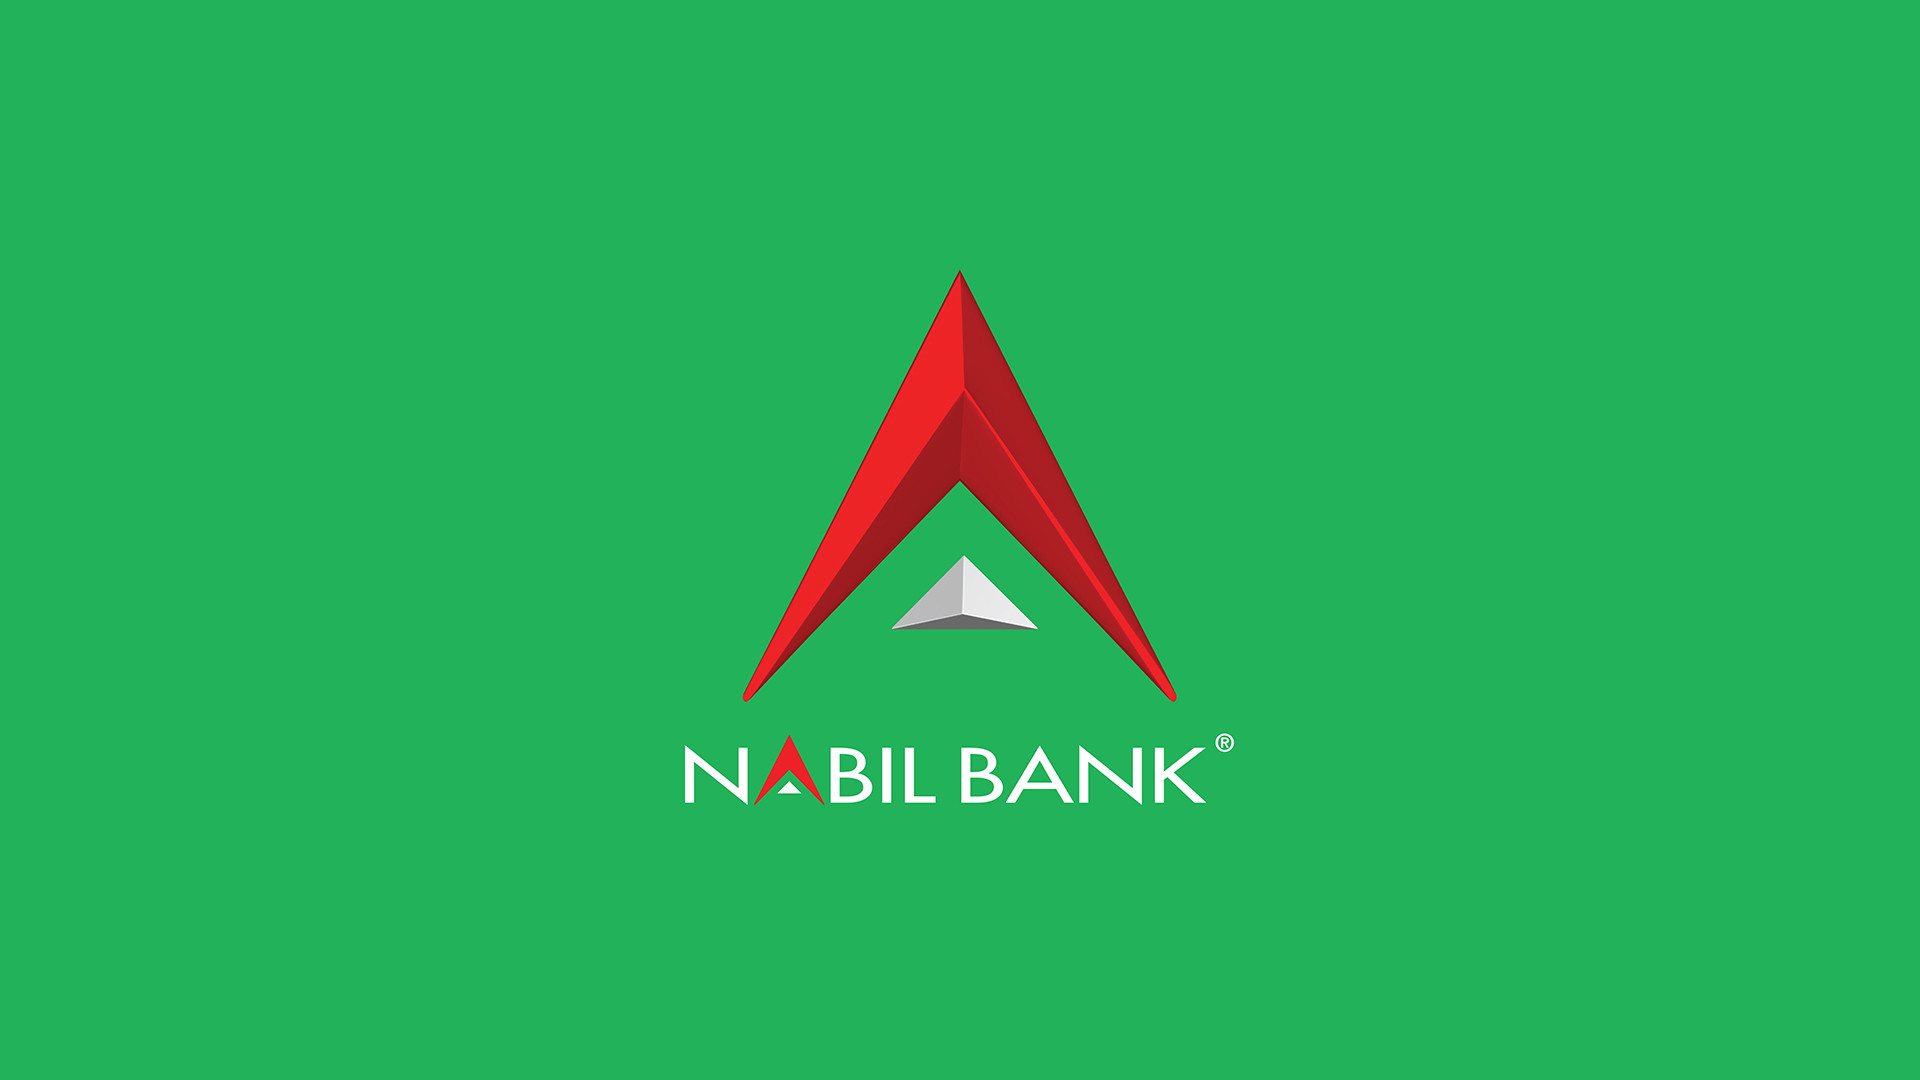 nabil bank limited